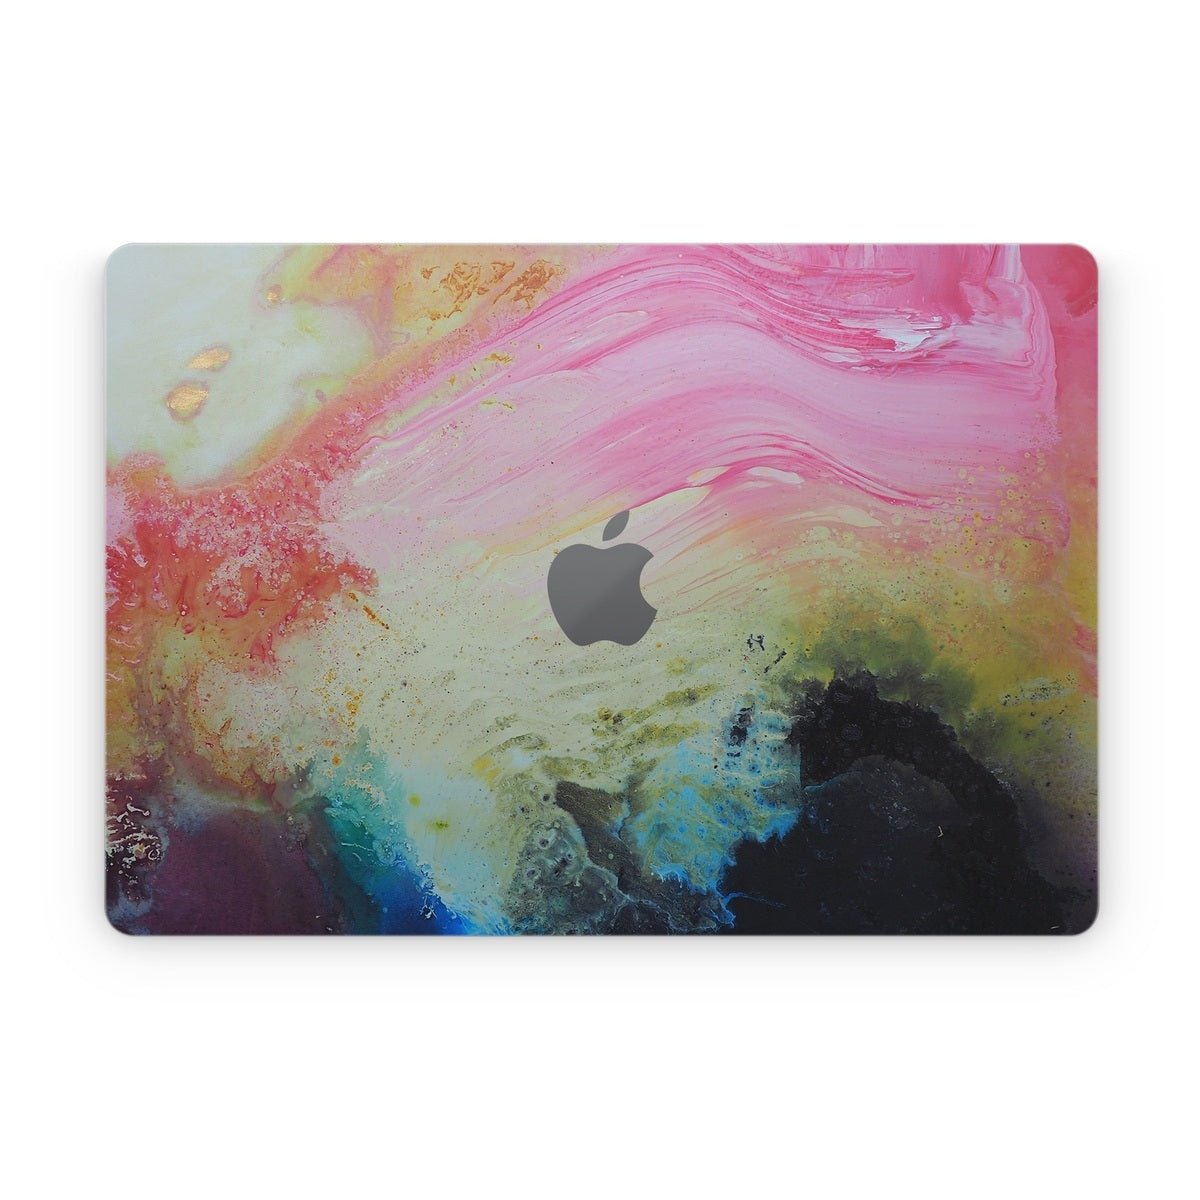 Abrupt - Apple MacBook Skin - Creative by Nature - DecalGirl